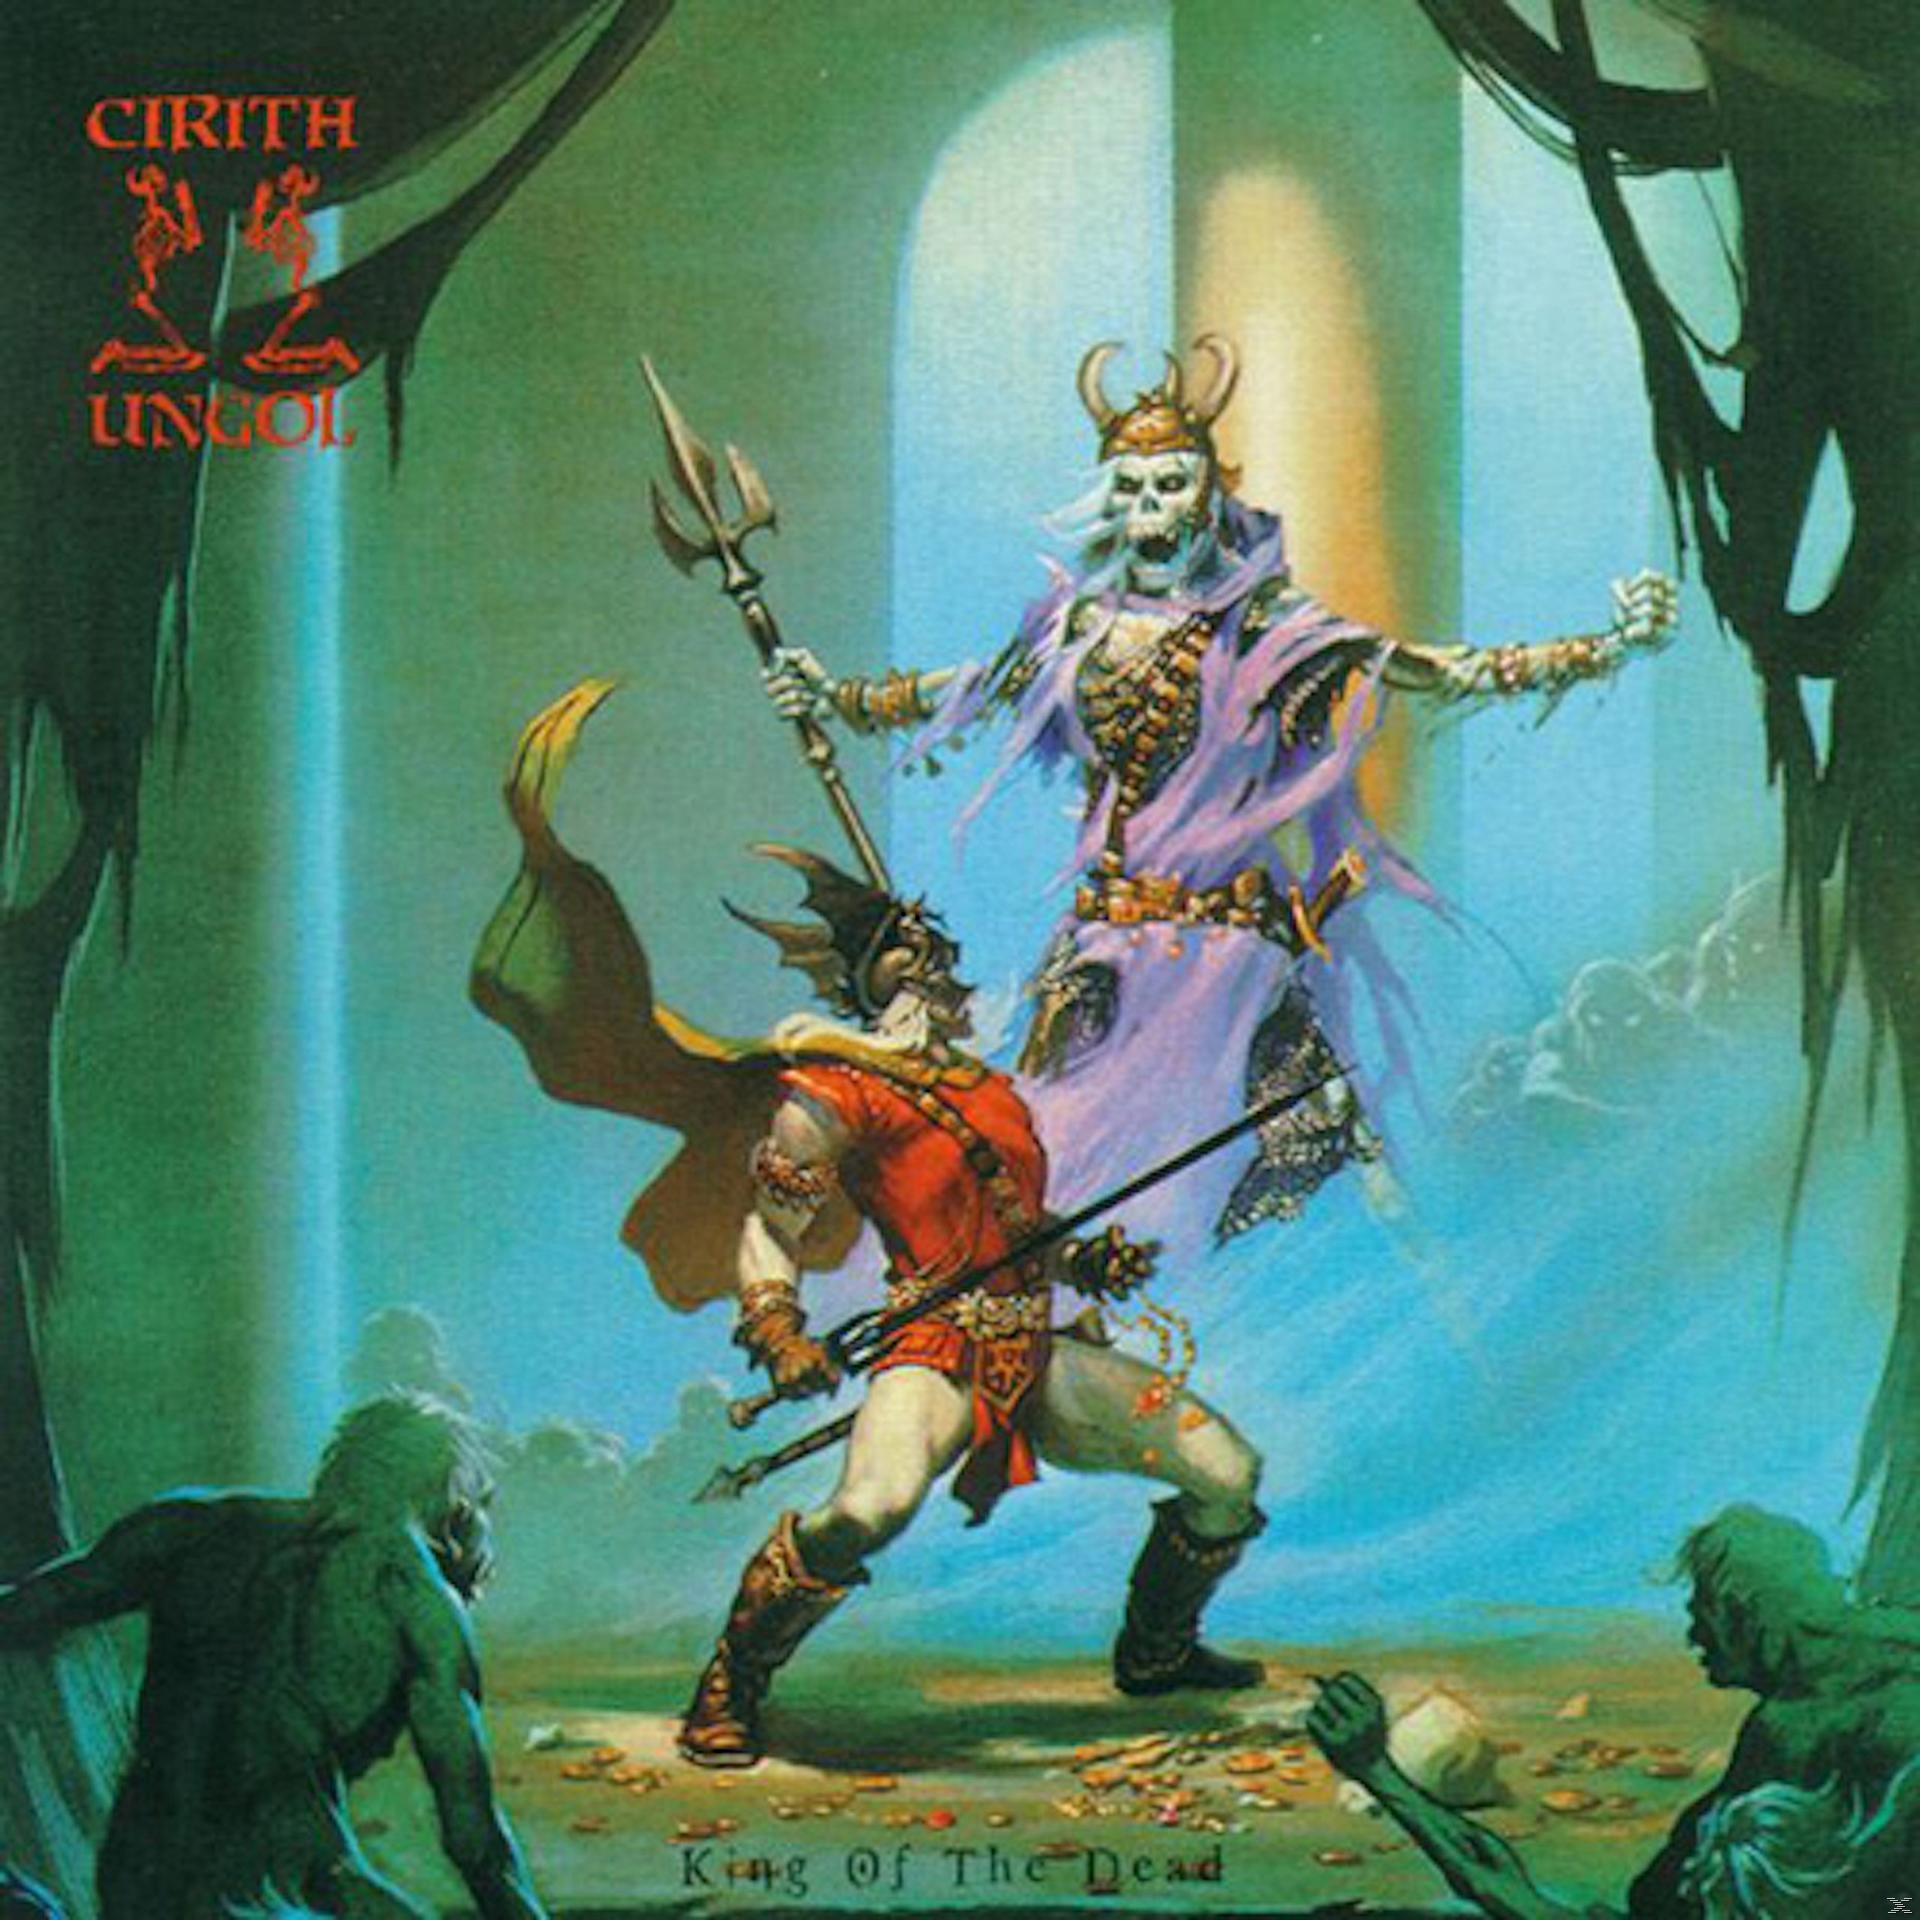 Cirith Ungol Ltd the Dead-180g Vinyl of Ed King Black - (Vinyl) 